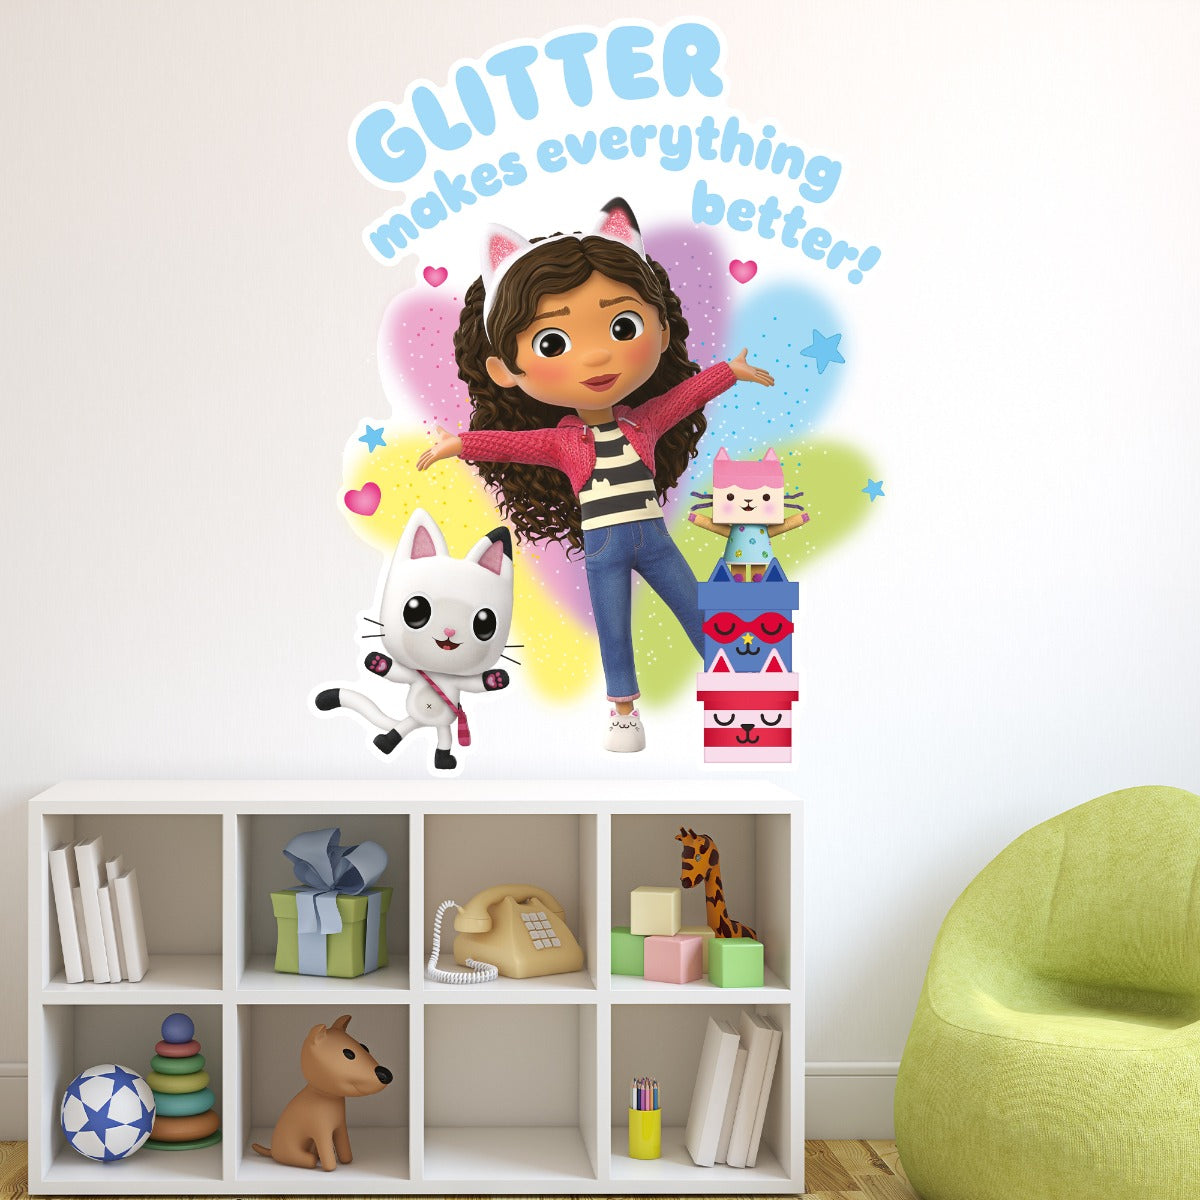 Gabby's Dollhouse Wall Sticker - Gabby and Friends Glitter Graphic